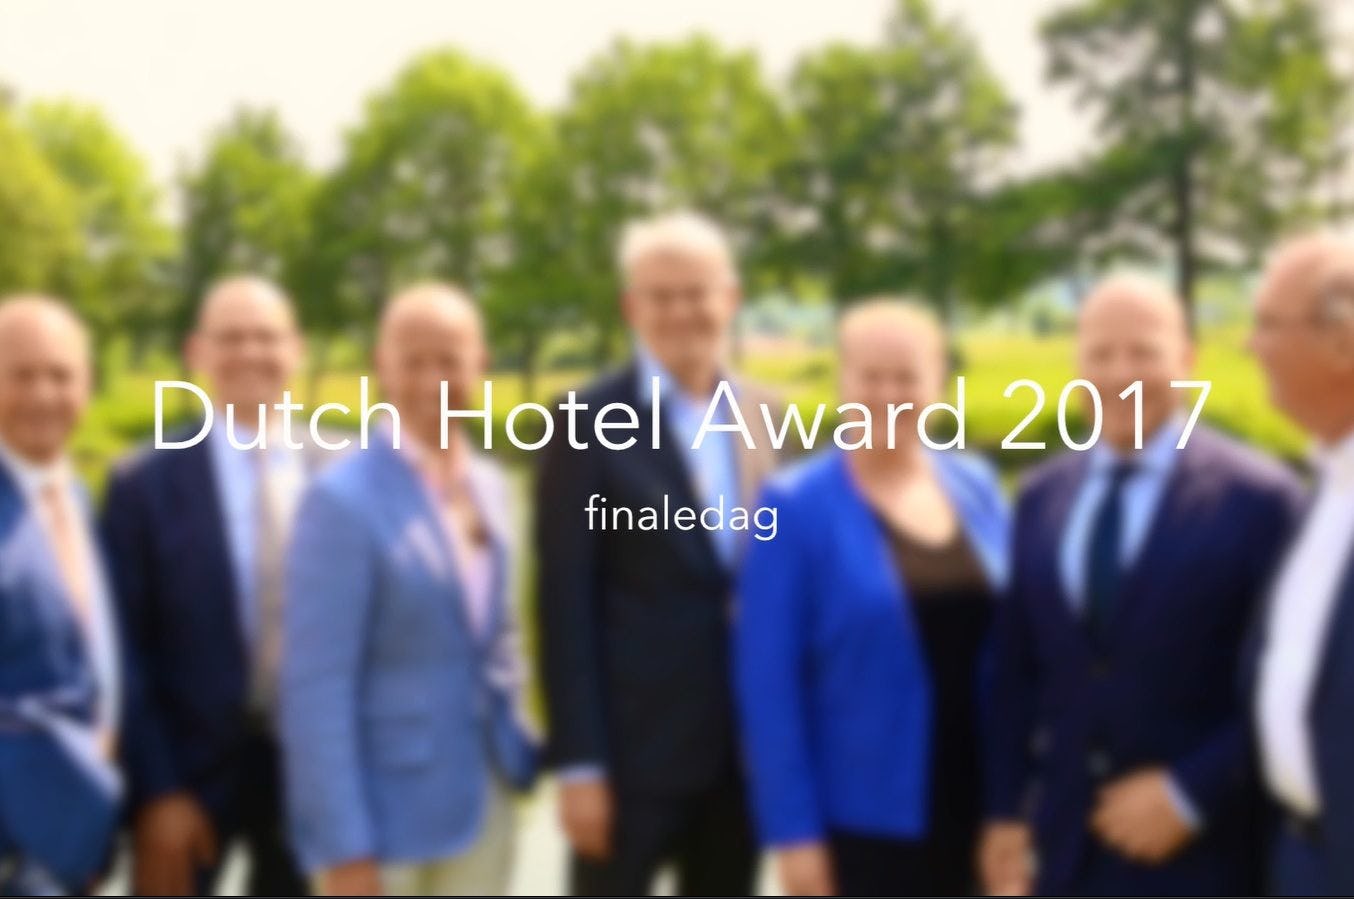 Finaledag Dutch Hotel Award 2017 [VIDEO]